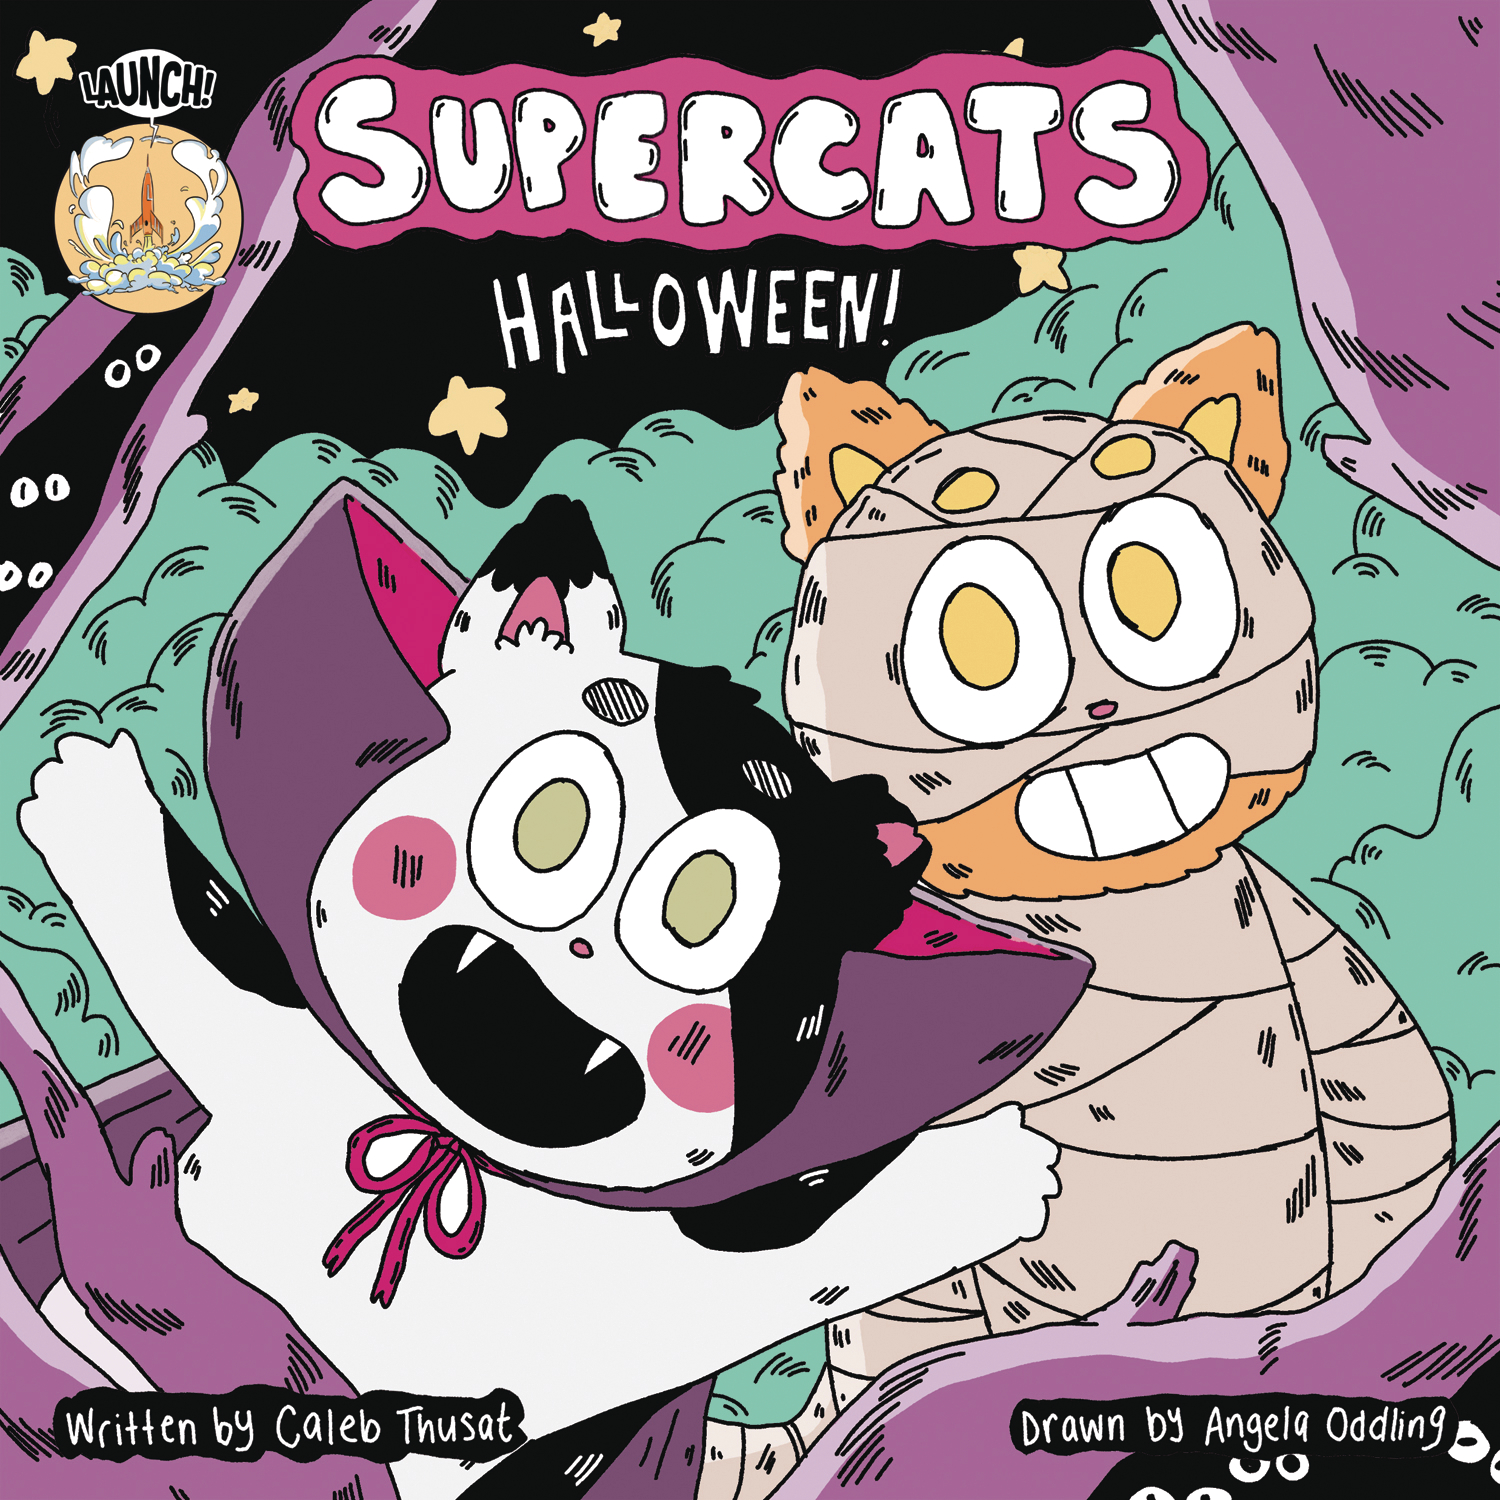 Supercats Halloween Special